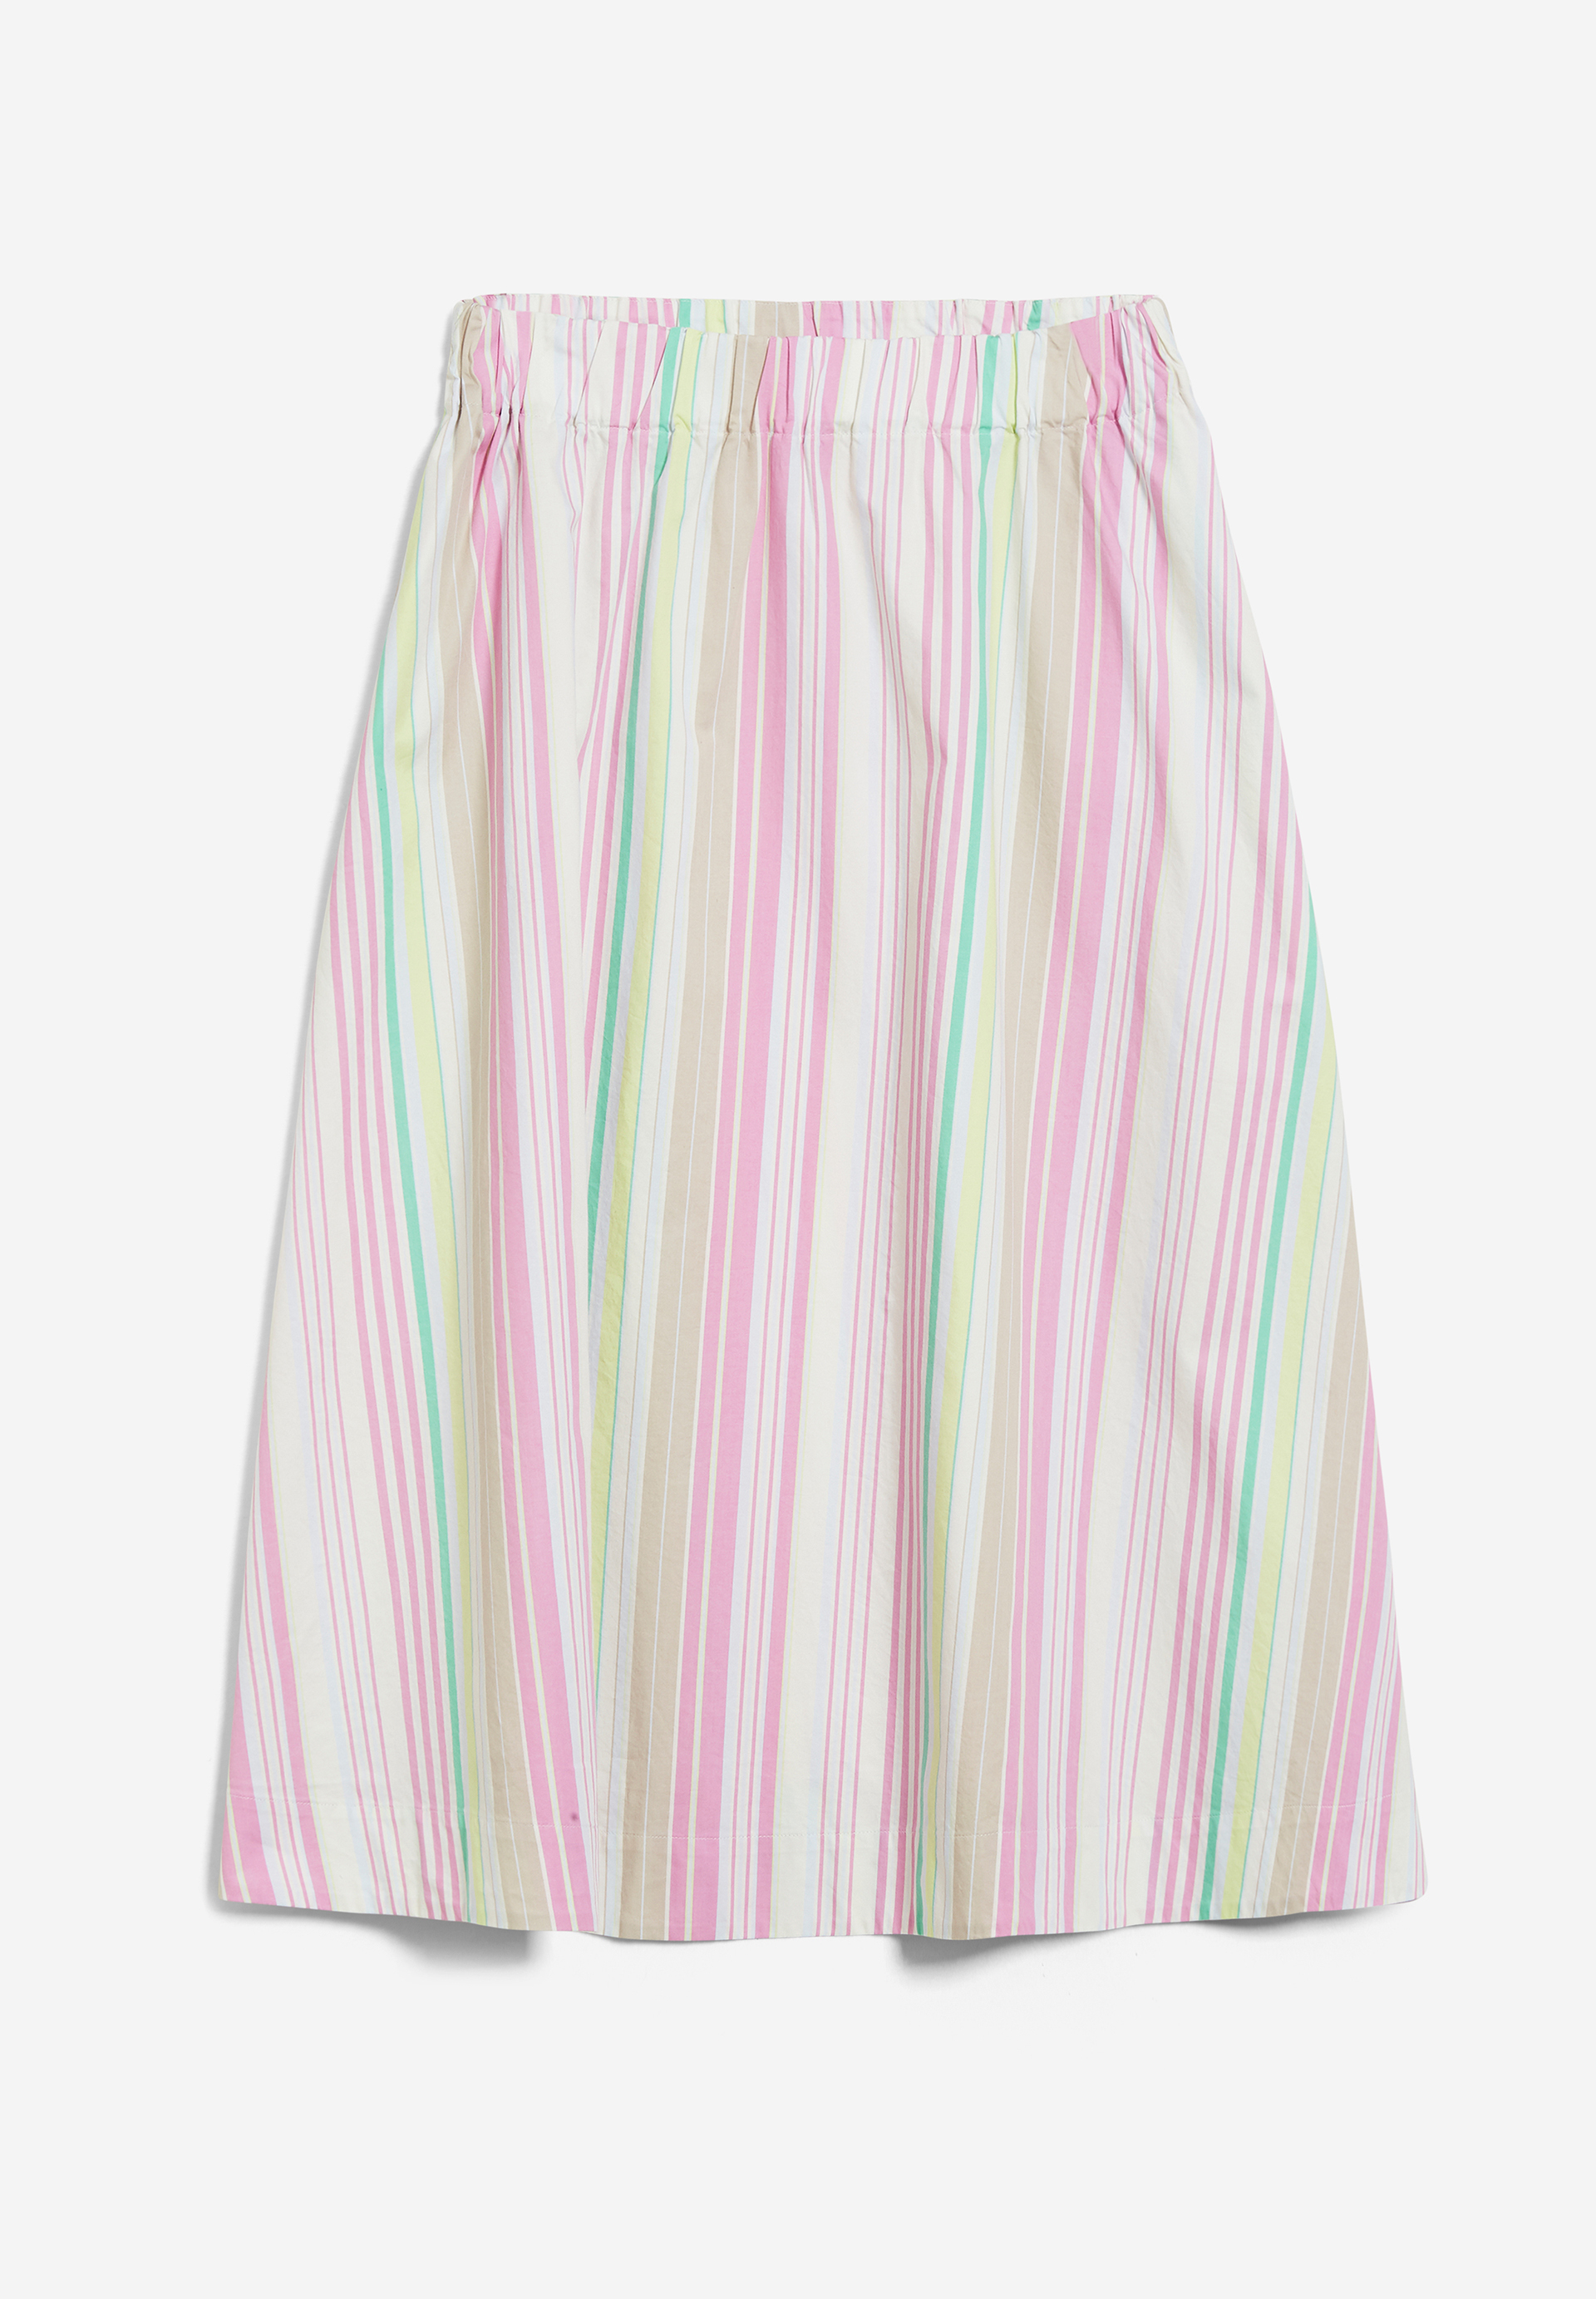 PARLOMAA STRIPES Woven Skirt Regular Fit made of Organic Cotton